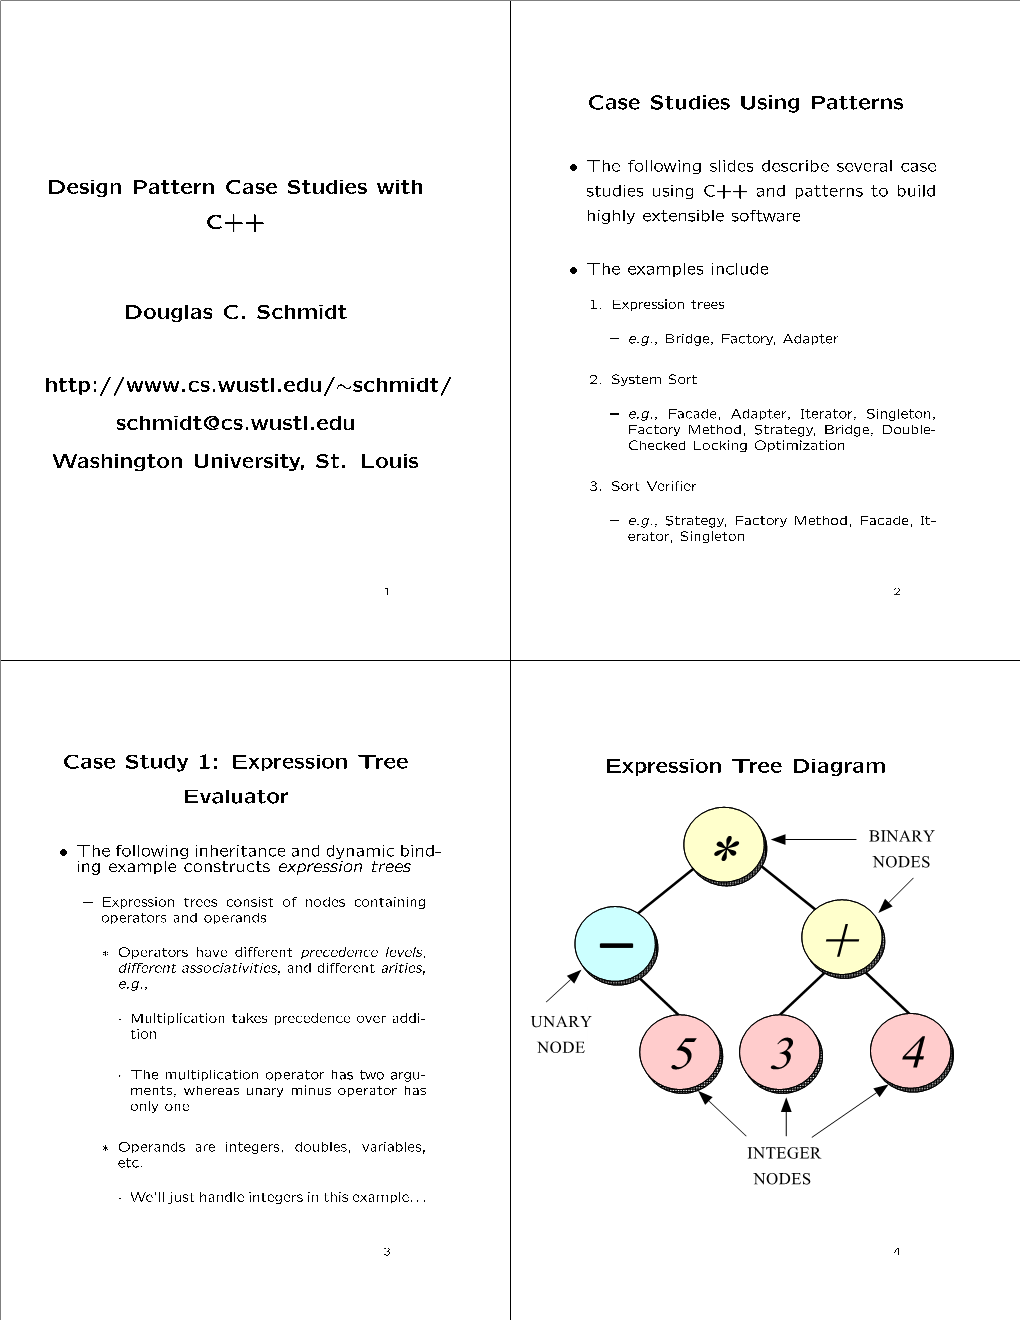 Design Pattern Case Studies with C++ Douglas C. Schmidt Http